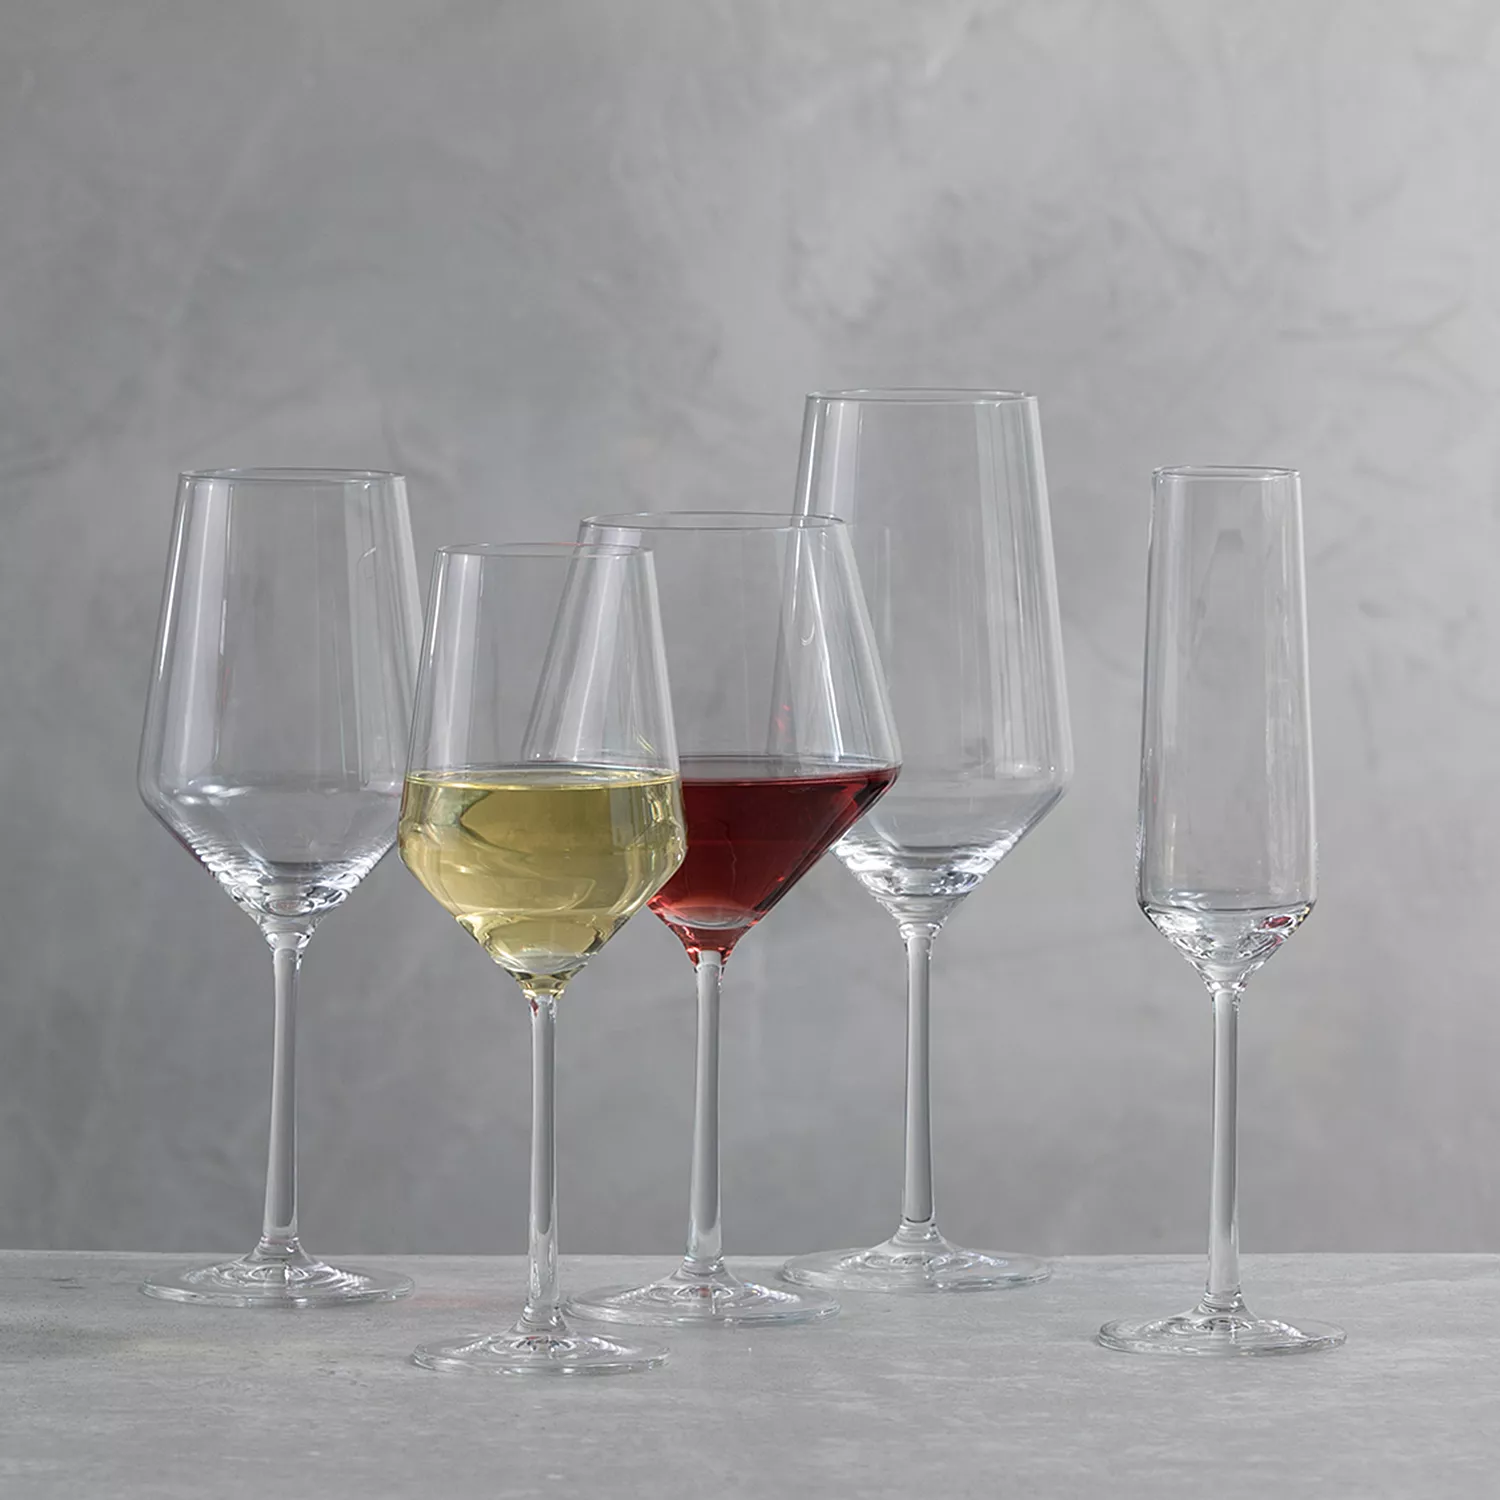 Schott Zwiesel 19 oz Pure Stemless White Wine Glass, Clear